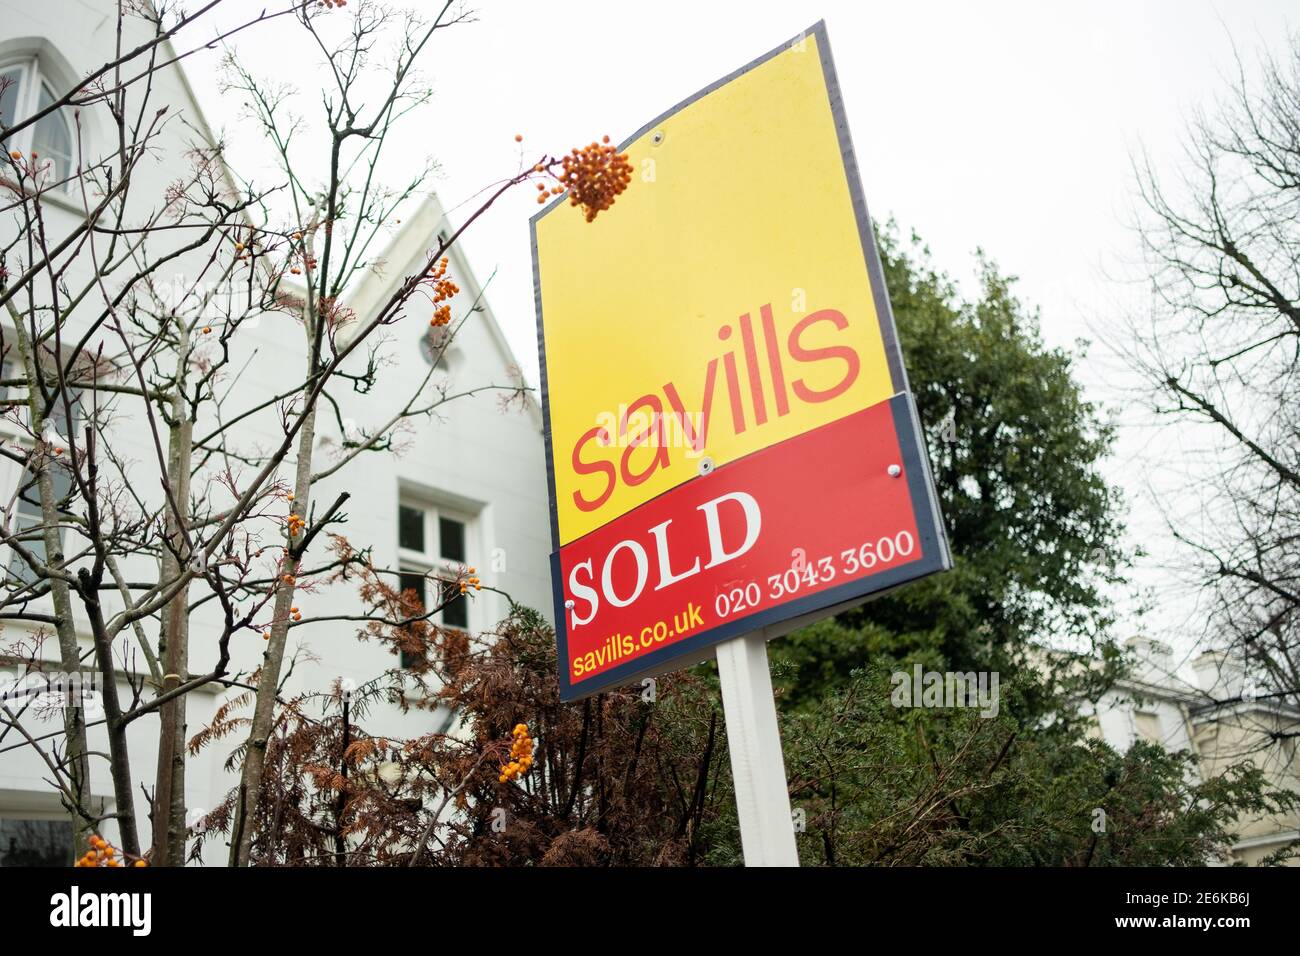 London- Savills estate agent sign advertising property in London Stock Photo